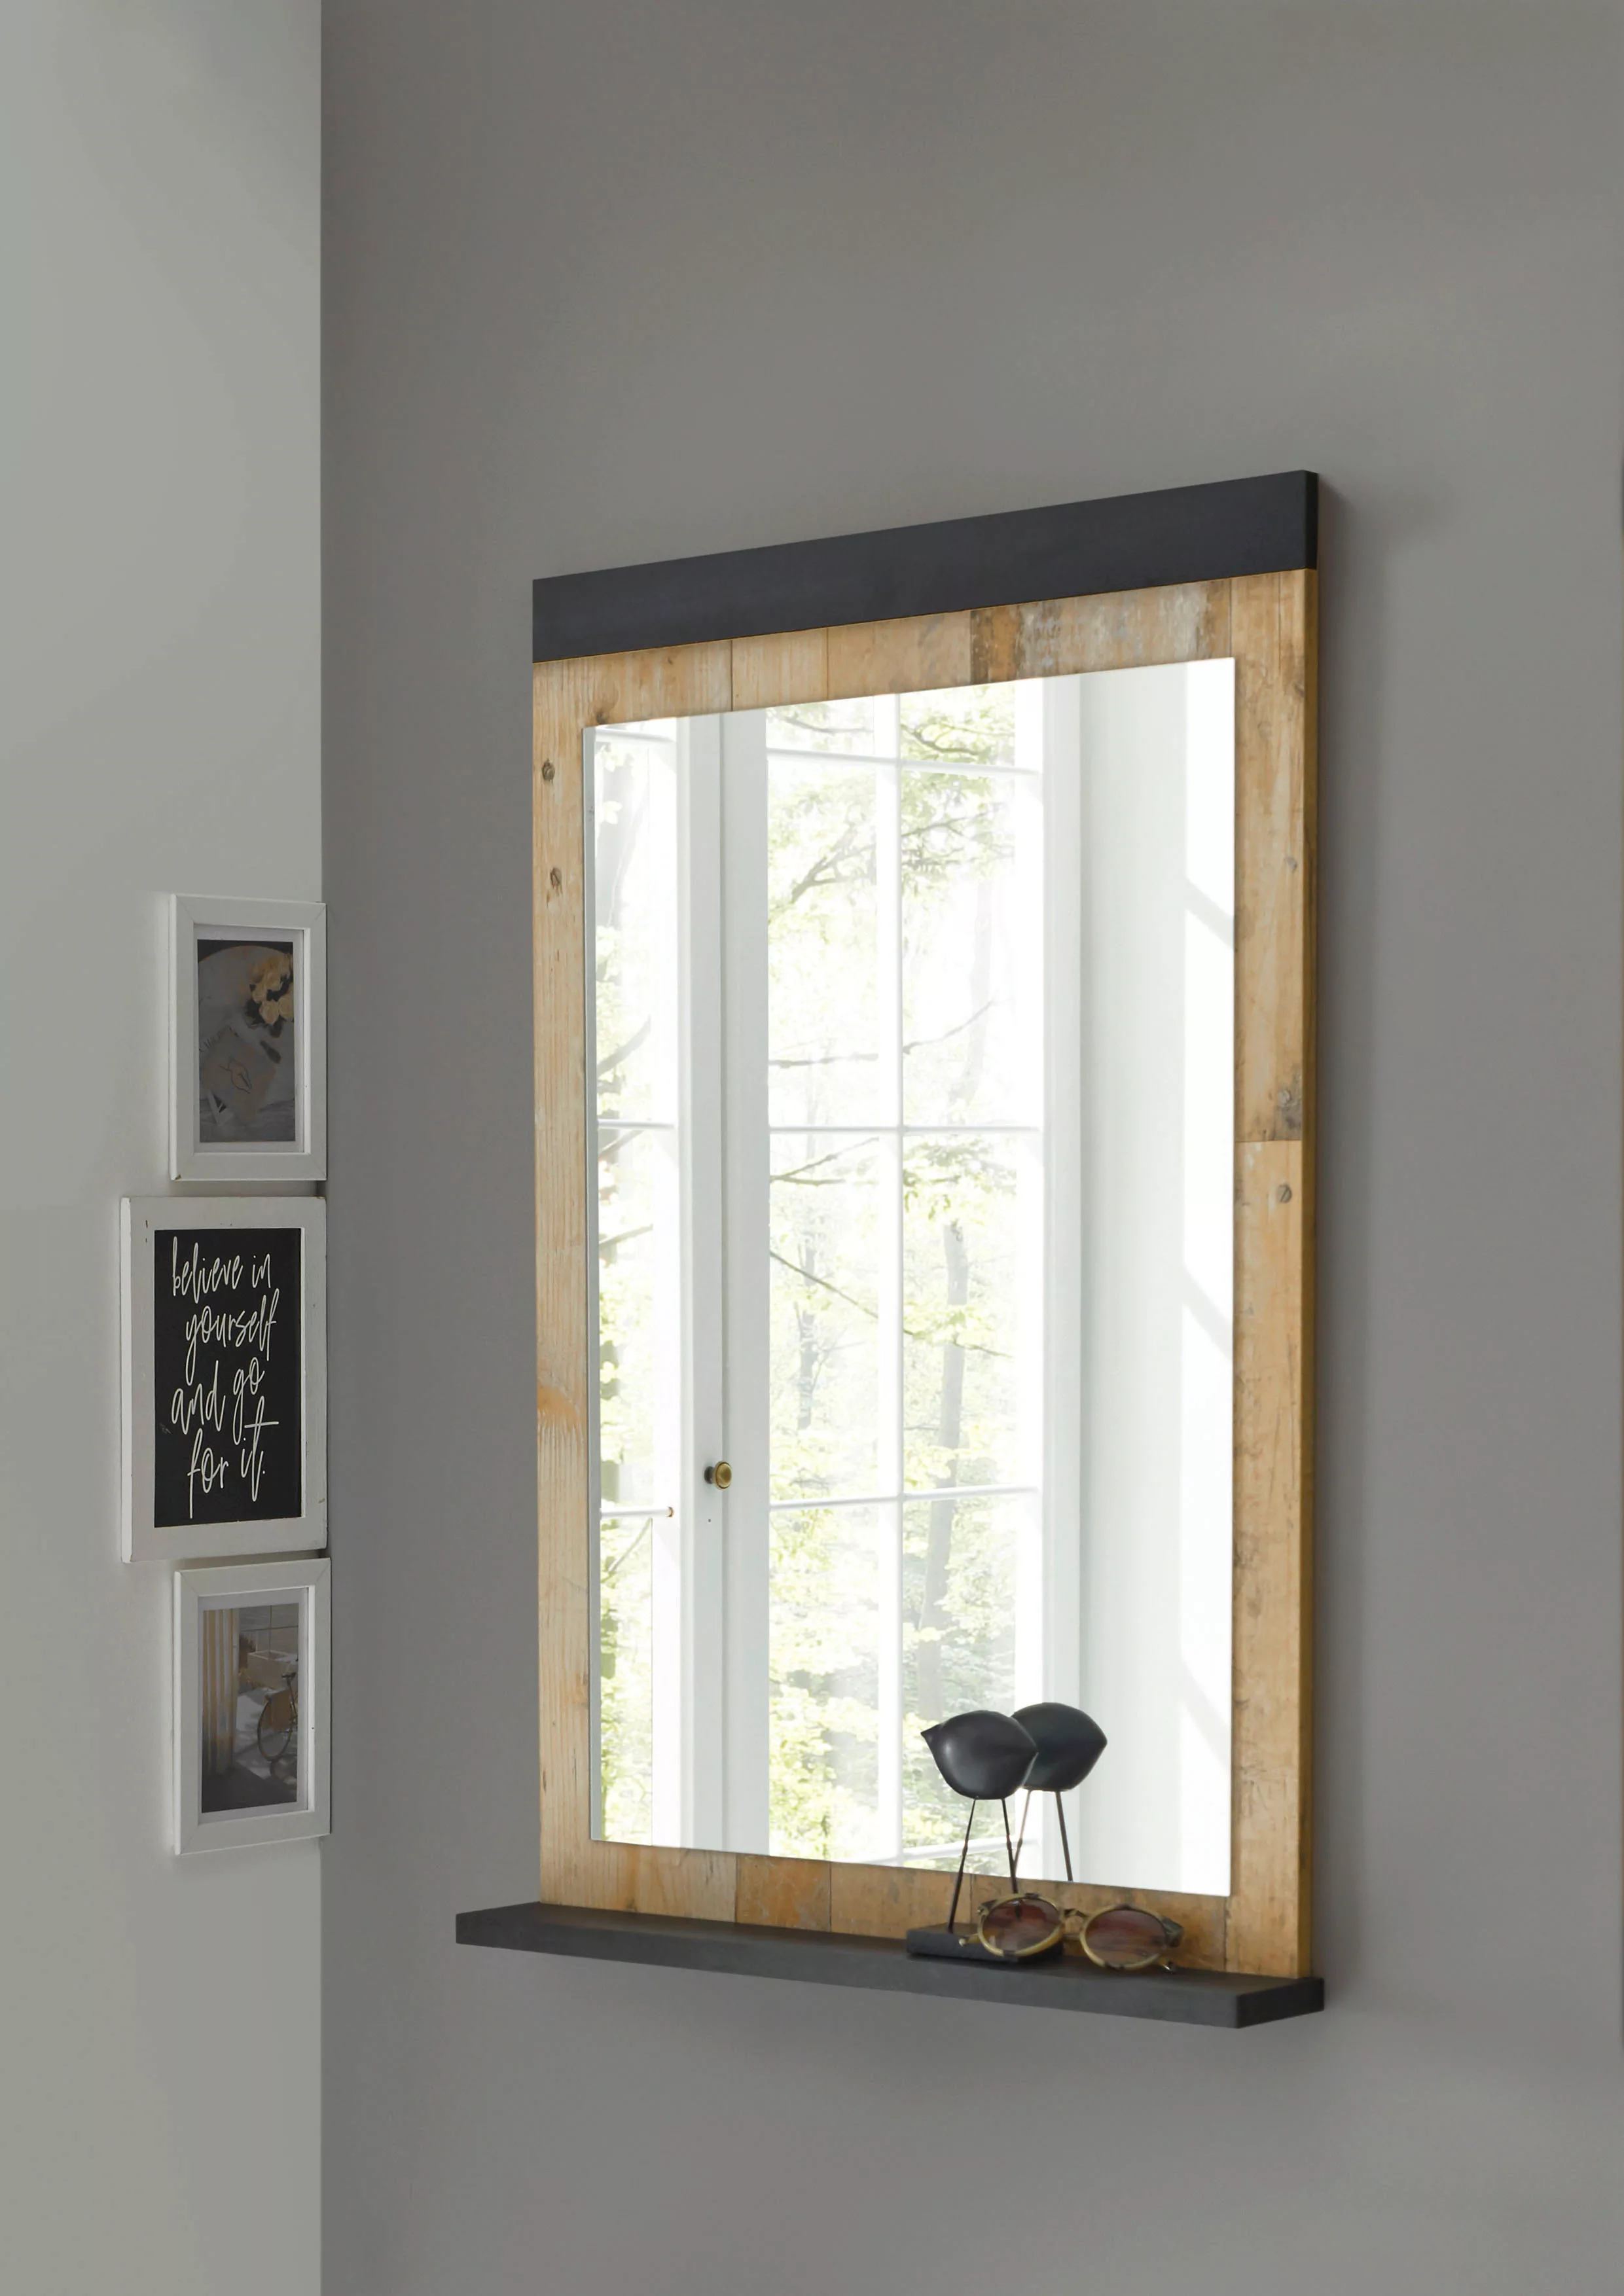 Home affaire Wandspiegel "SHERWOOD", in modernem Holz Dekor, Höhe 95 cm günstig online kaufen